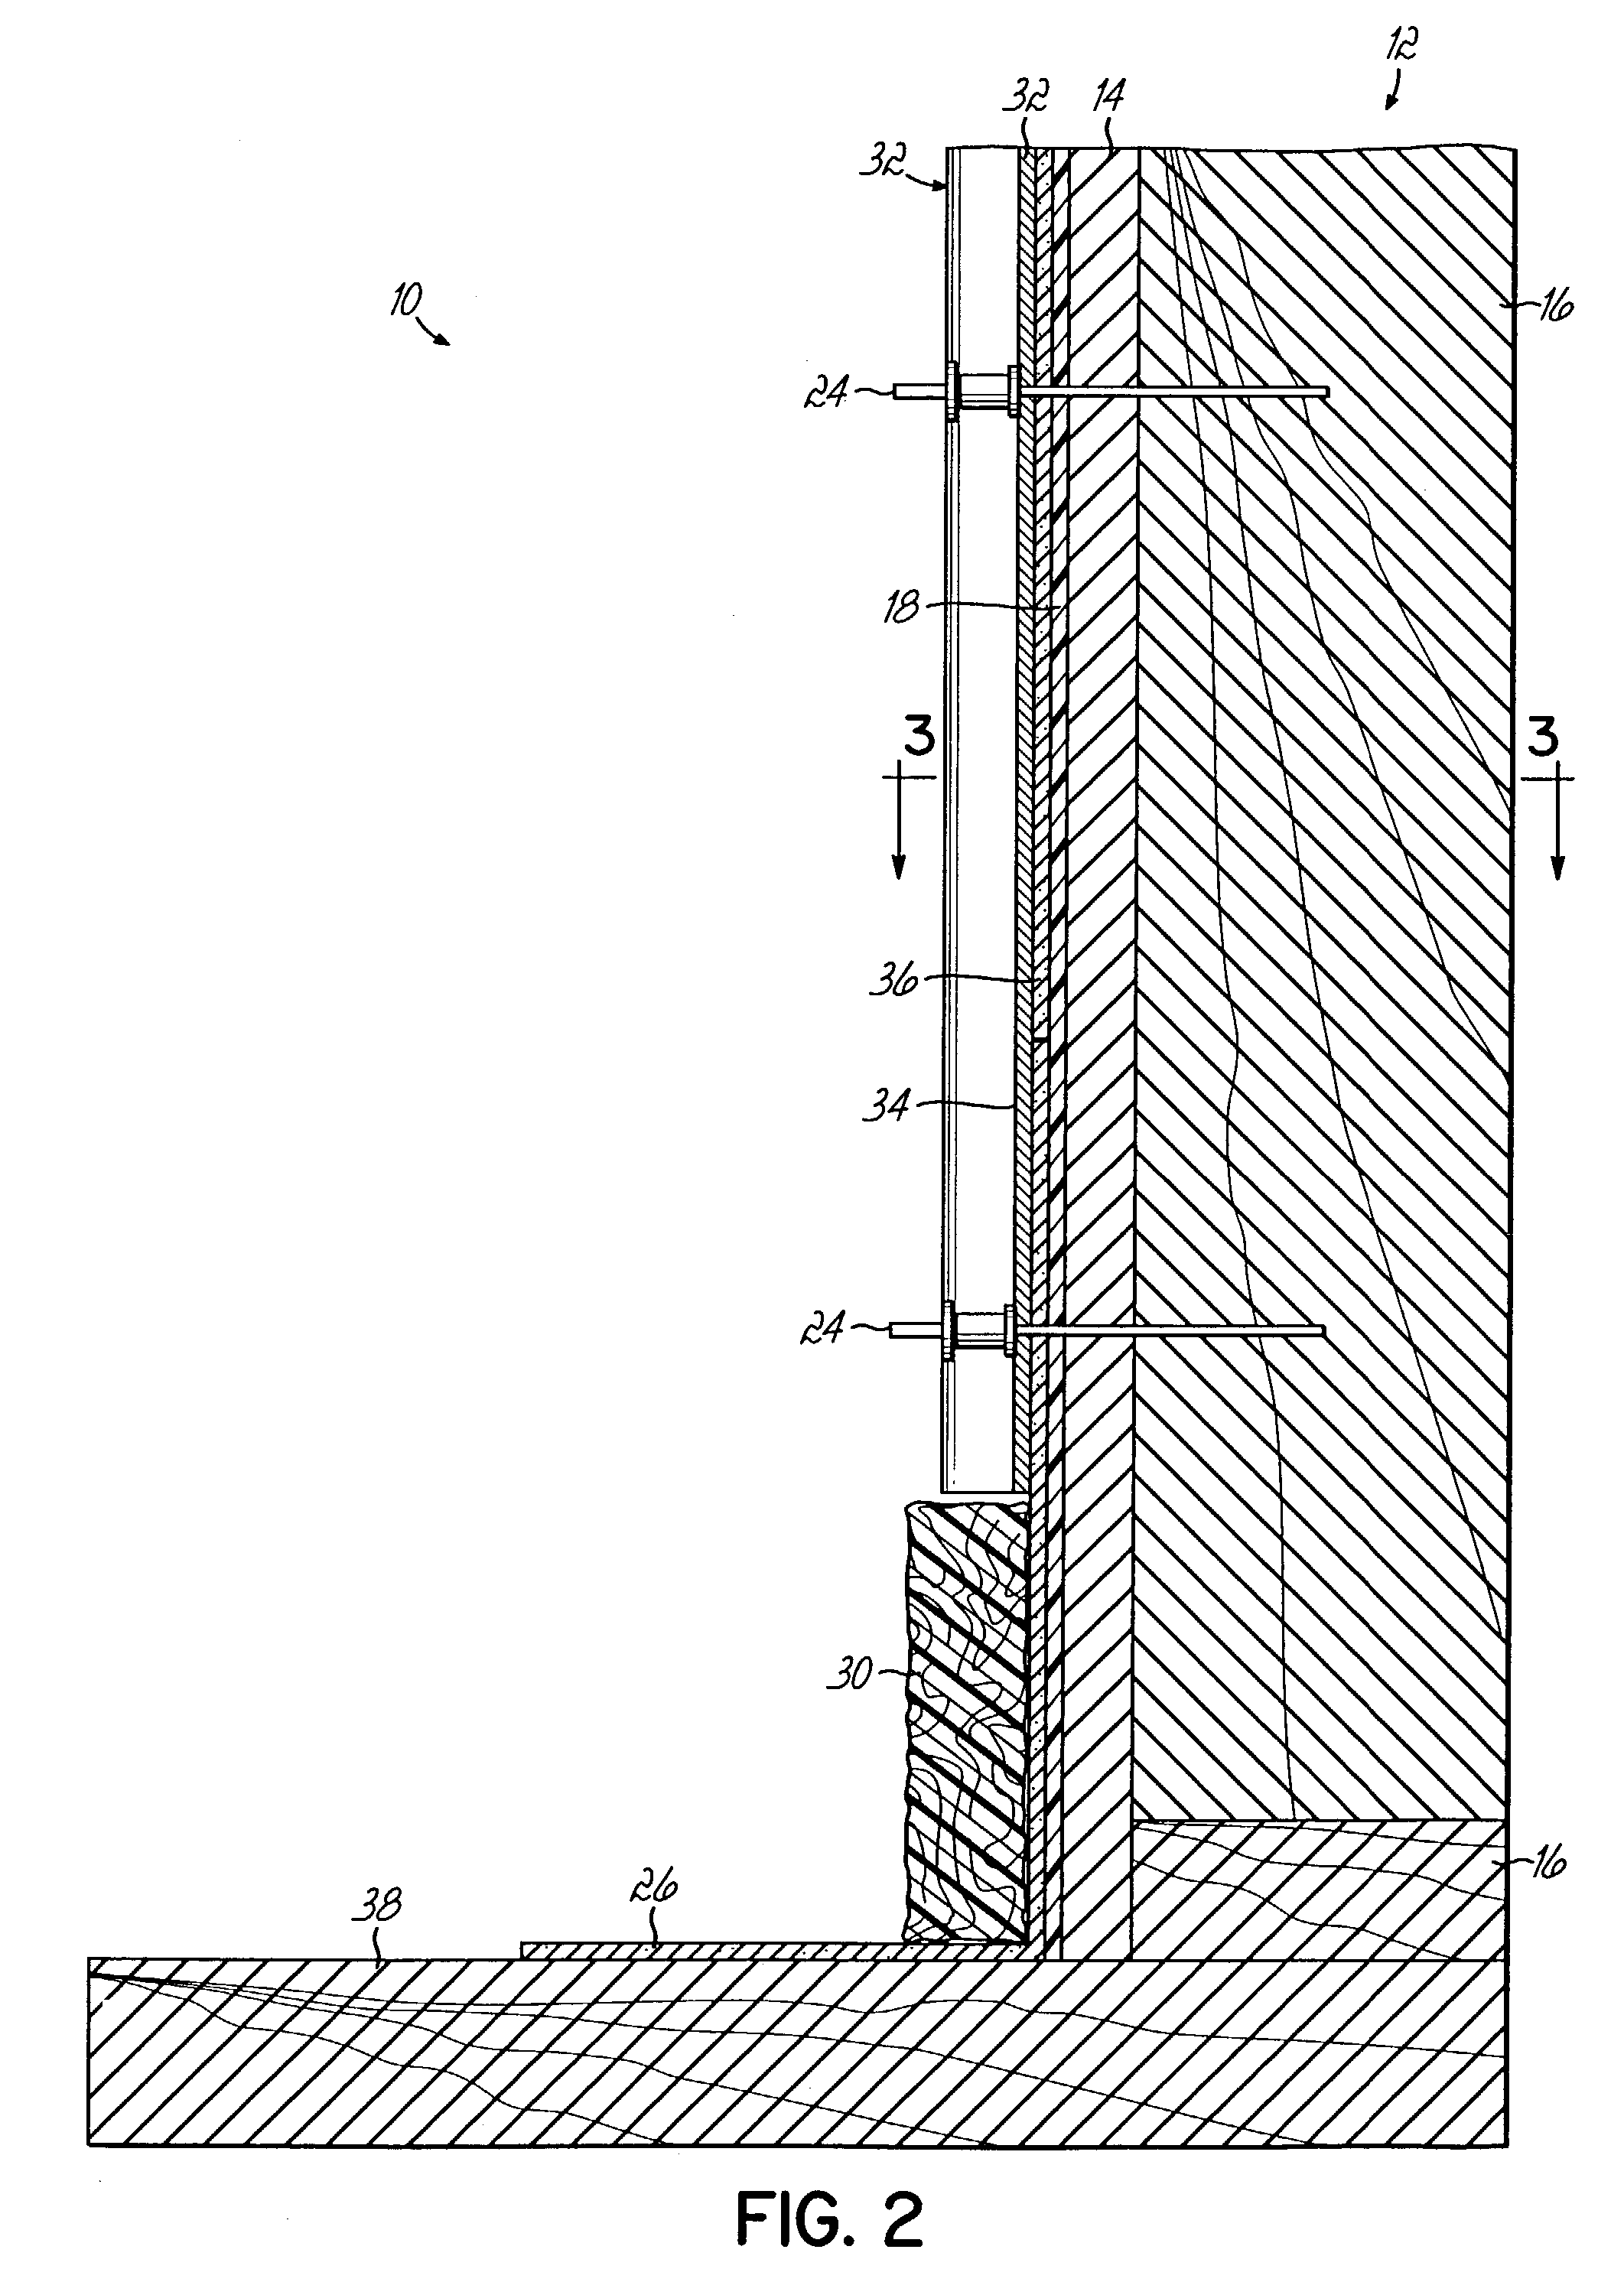 Air circulation board for cavity wall construction